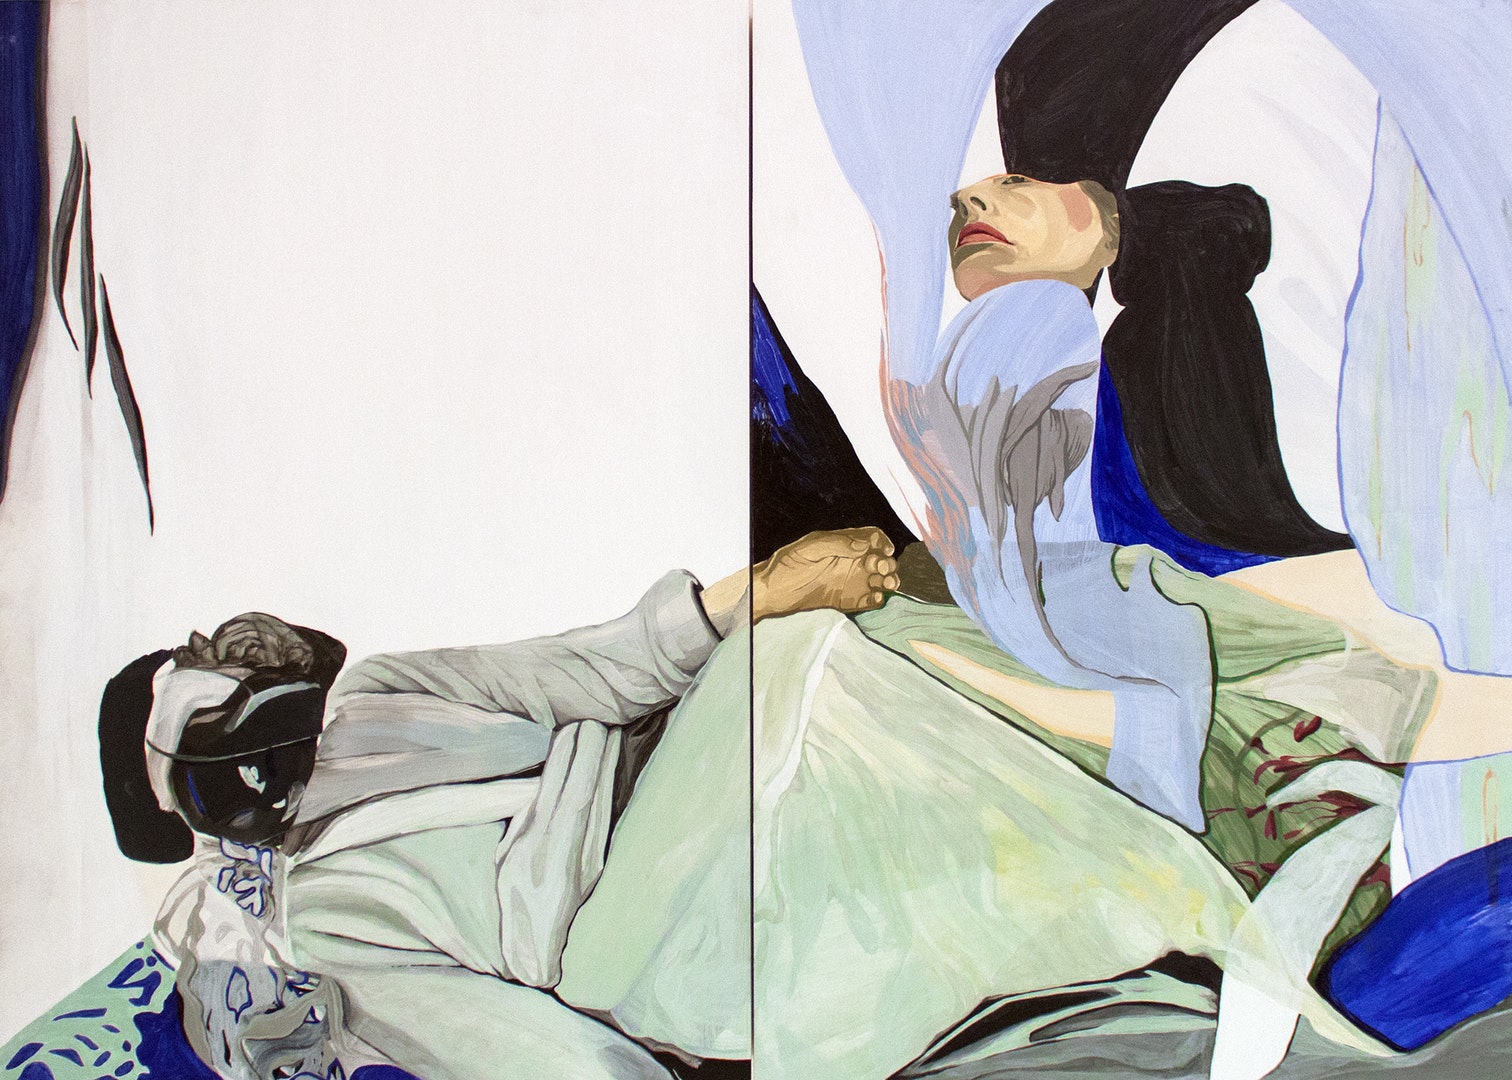 'Between Man and Man', Magdalena Gluszak - Holeksa, Oil on board, 61 x 85 x 4.4 cm